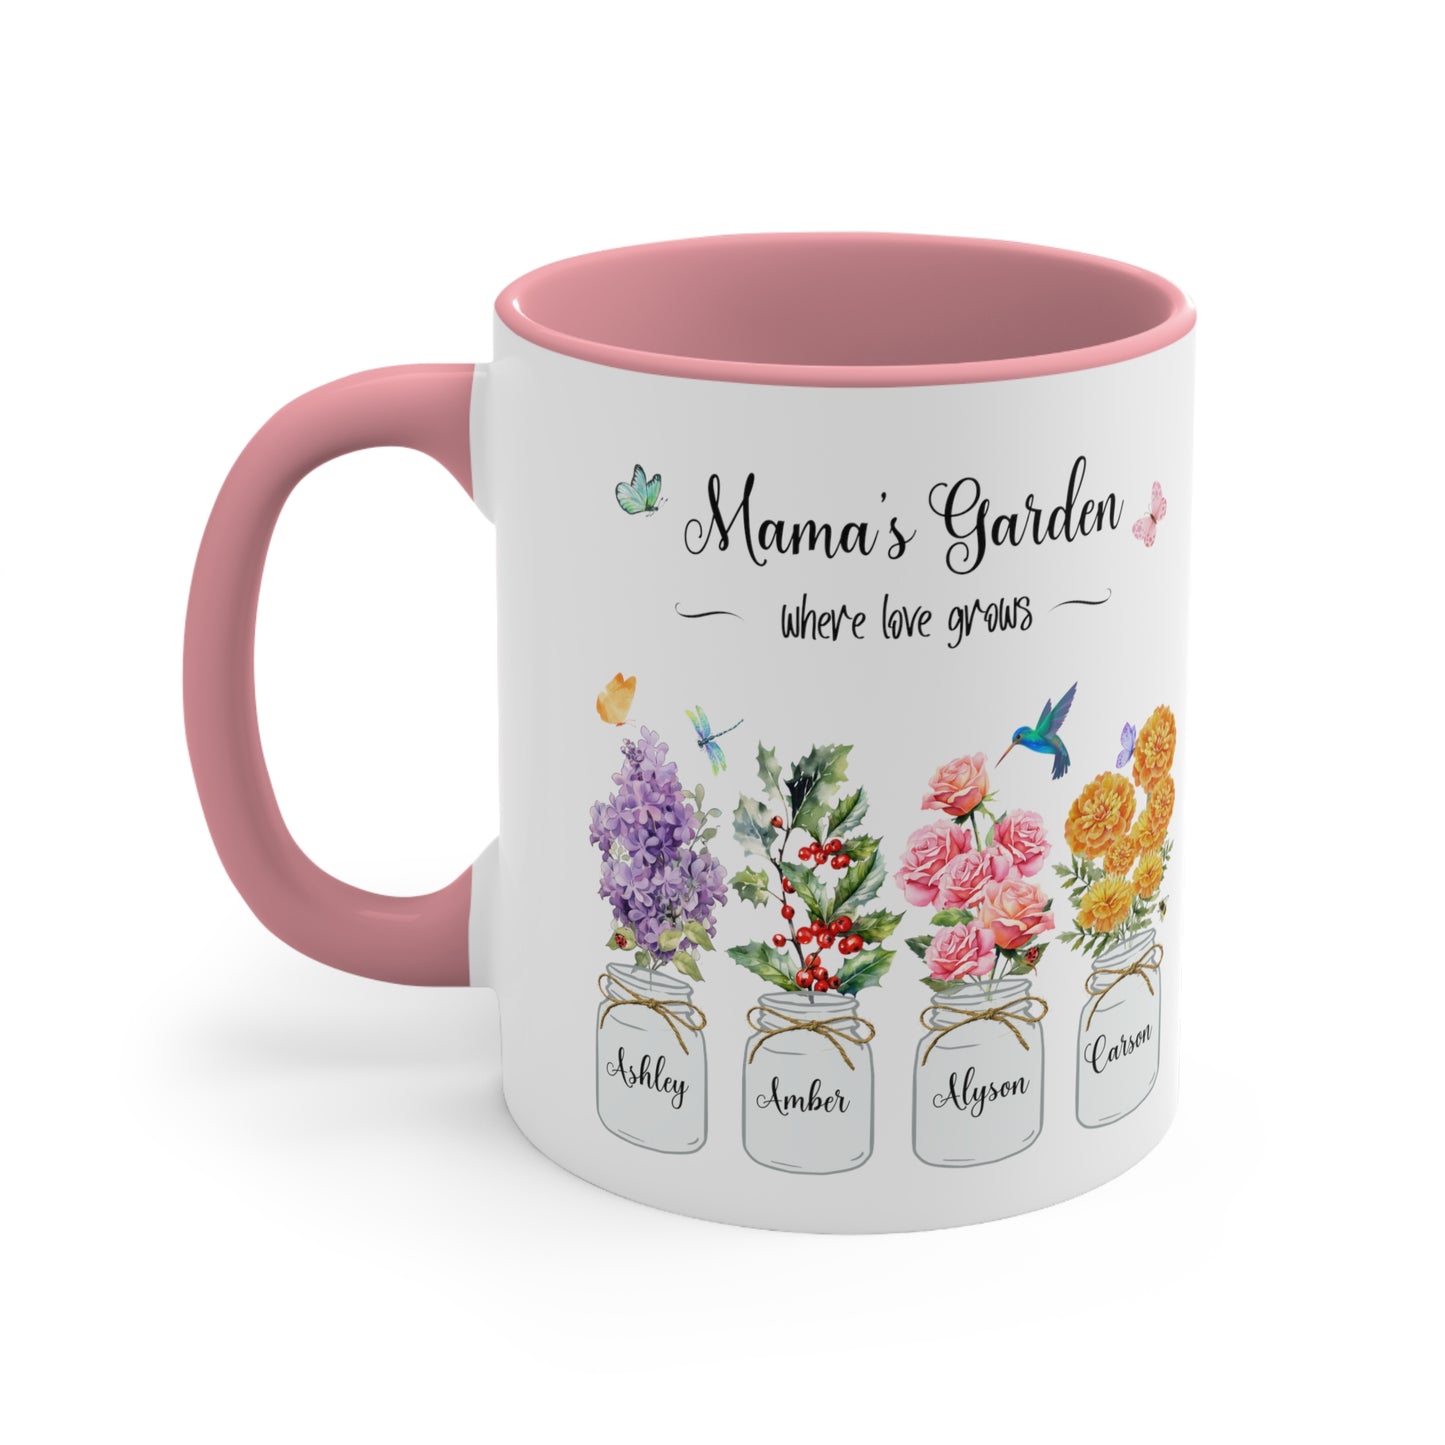 Kiesha's Garden Accent Coffee Mug, 11oz